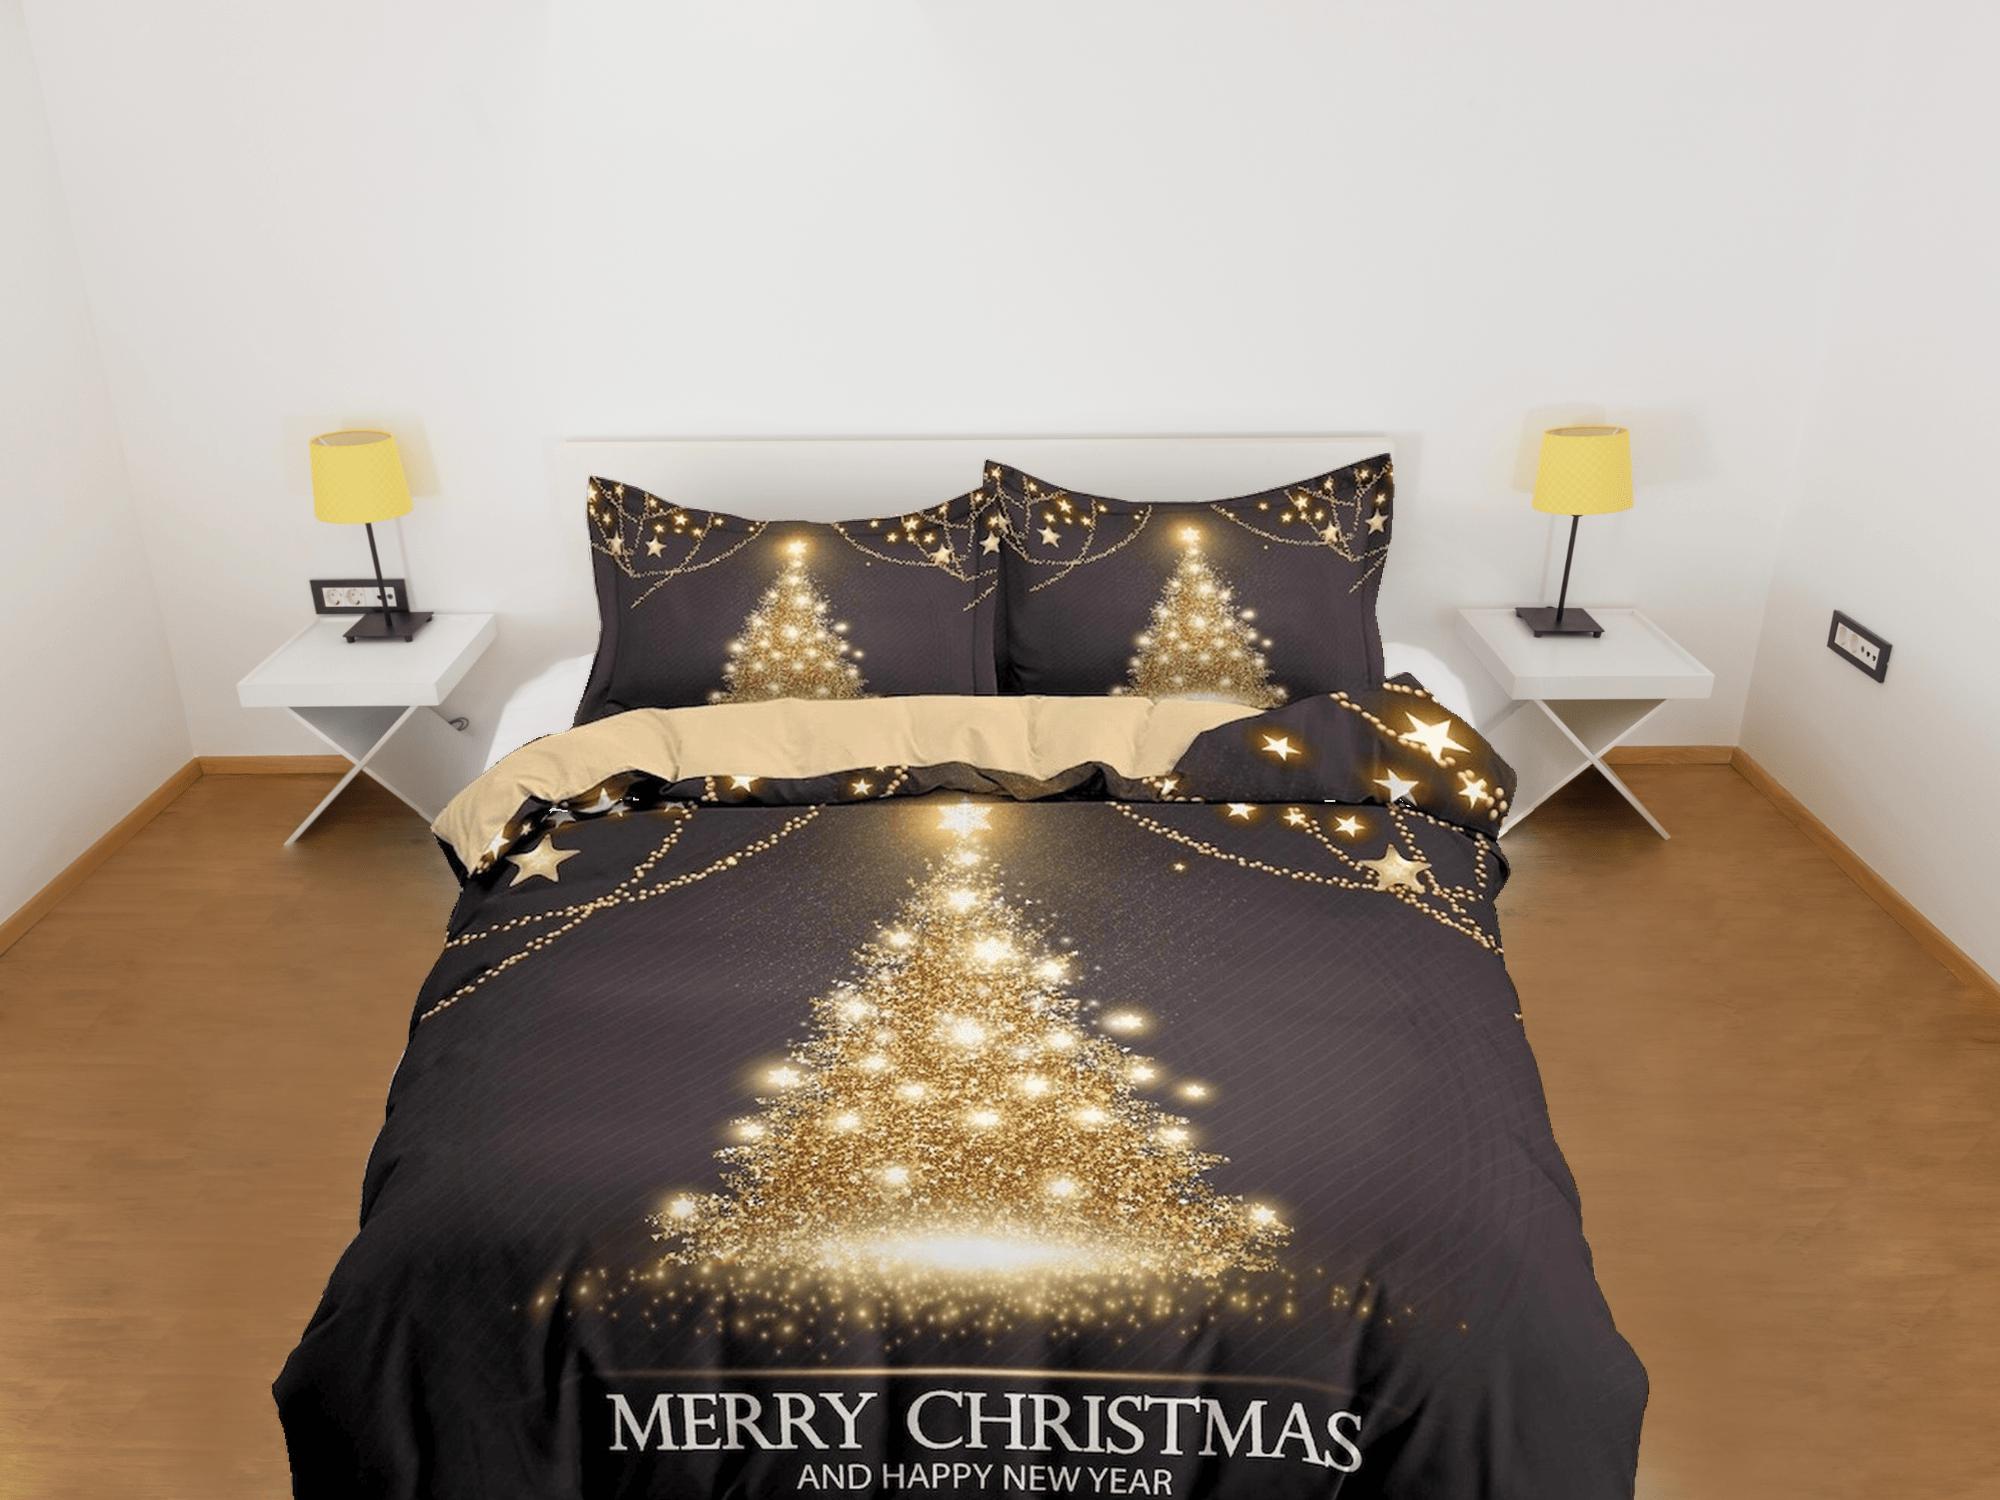 daintyduvet Golden Christmas tree bedding & pillowcase holiday gift duvet cover king queen full twin toddler bedding baby Christmas farmhouse decor